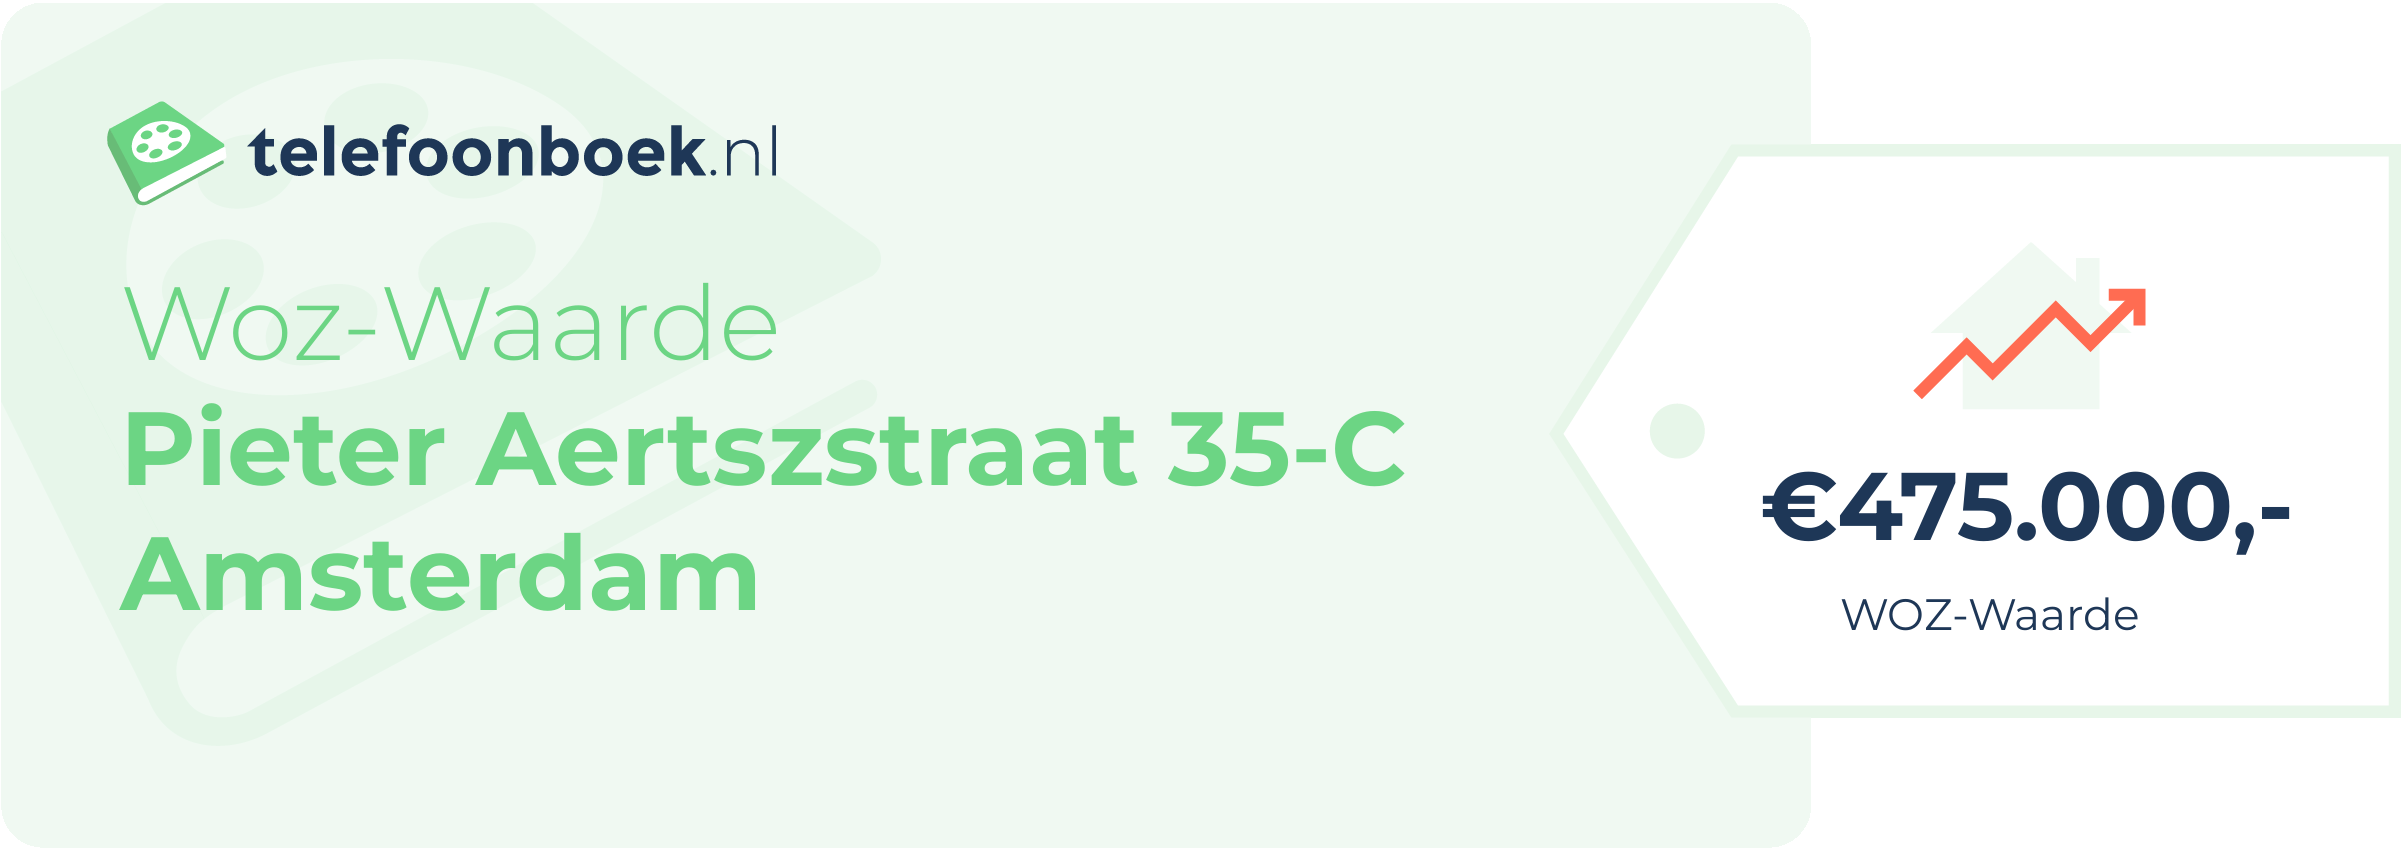 WOZ-waarde Pieter Aertszstraat 35-C Amsterdam